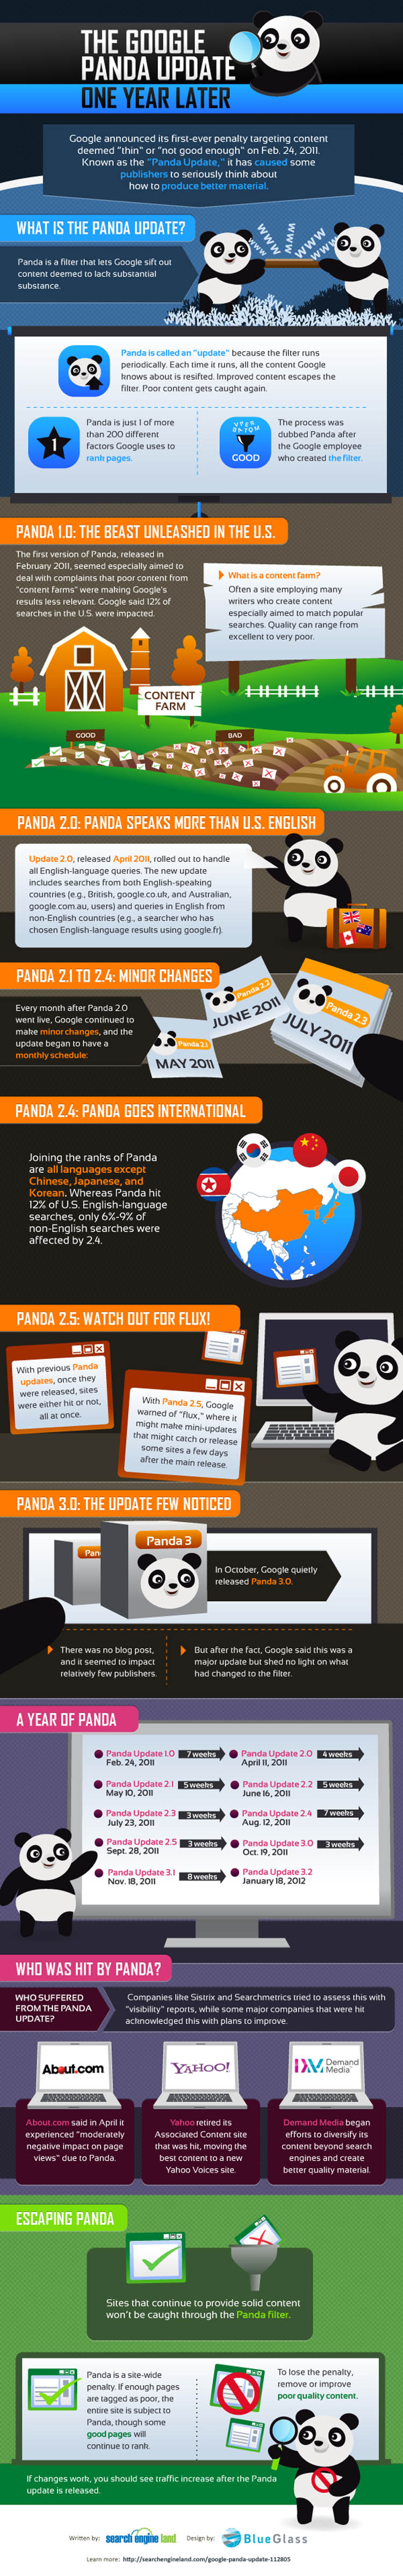 The Google Panda Update, One Year Later